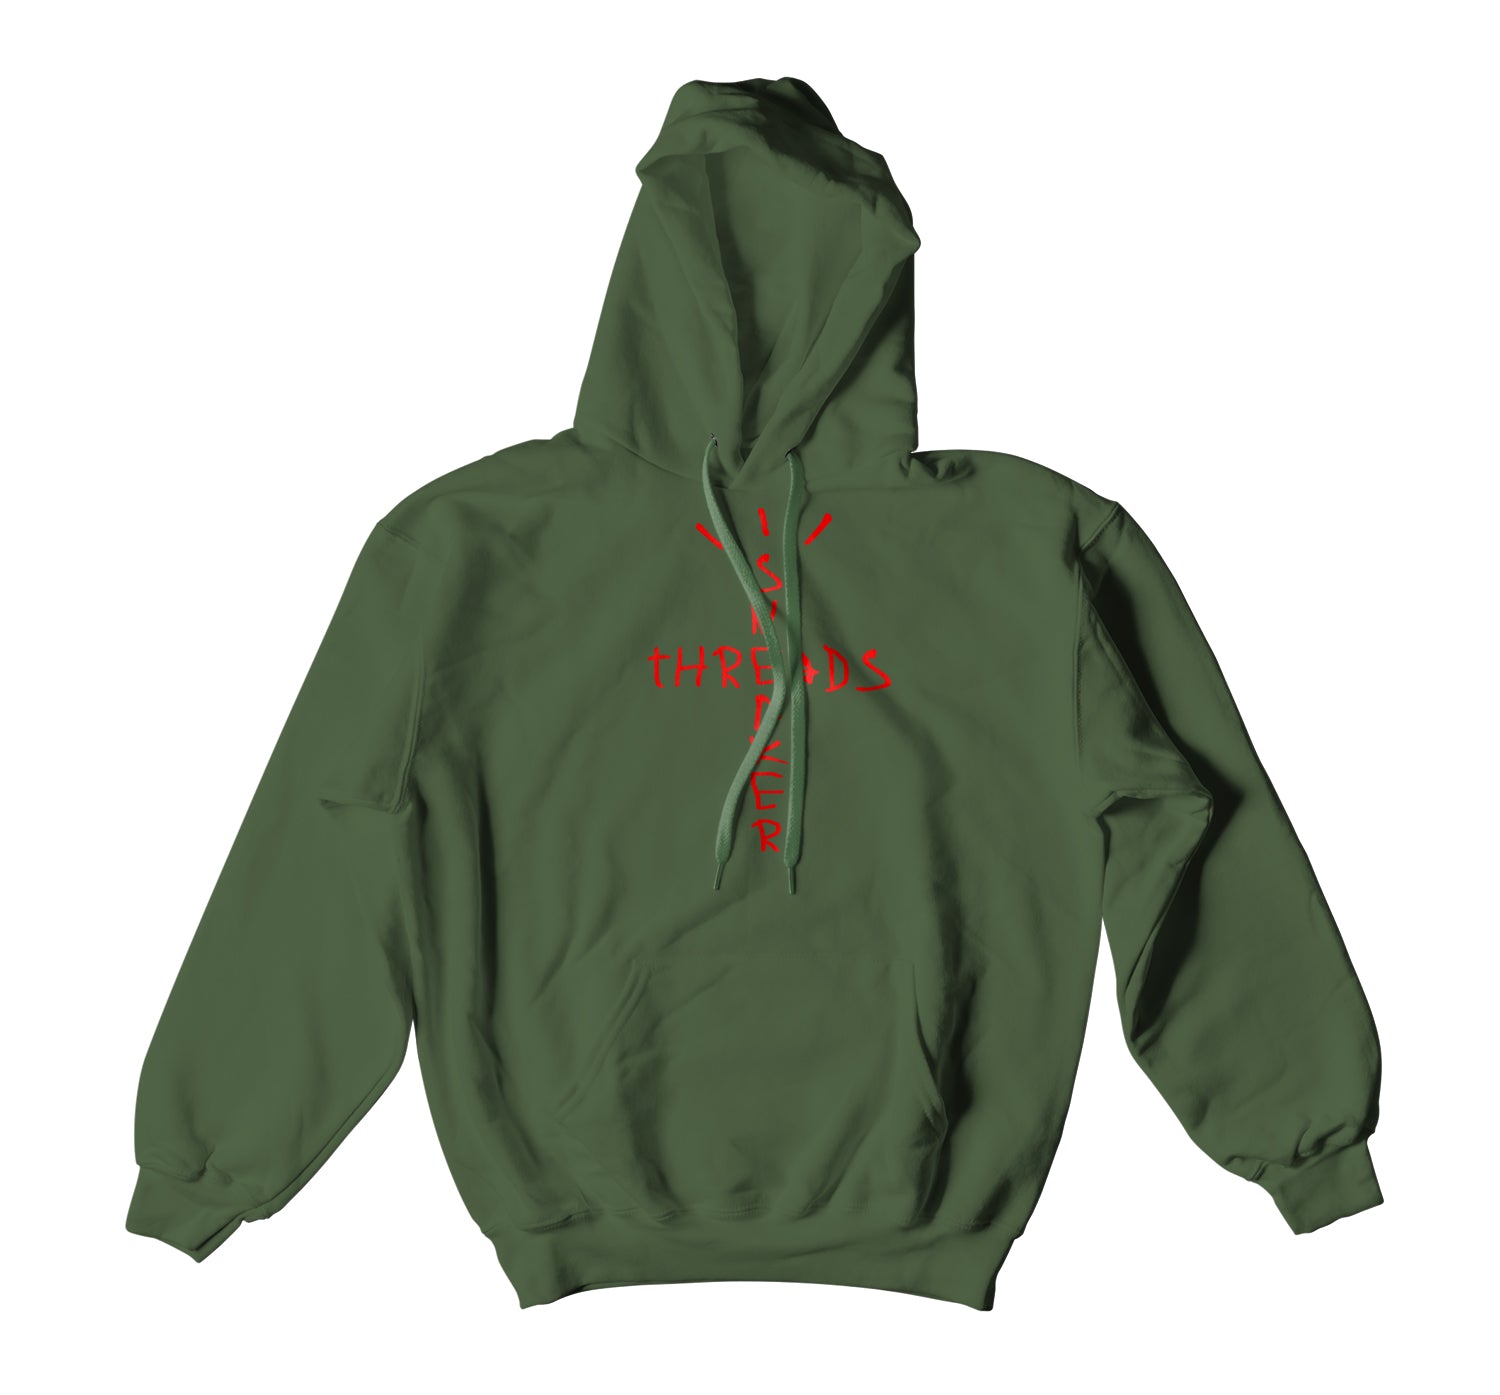 Dopest hoodies to wear with Jordan 9 Cactus Jack